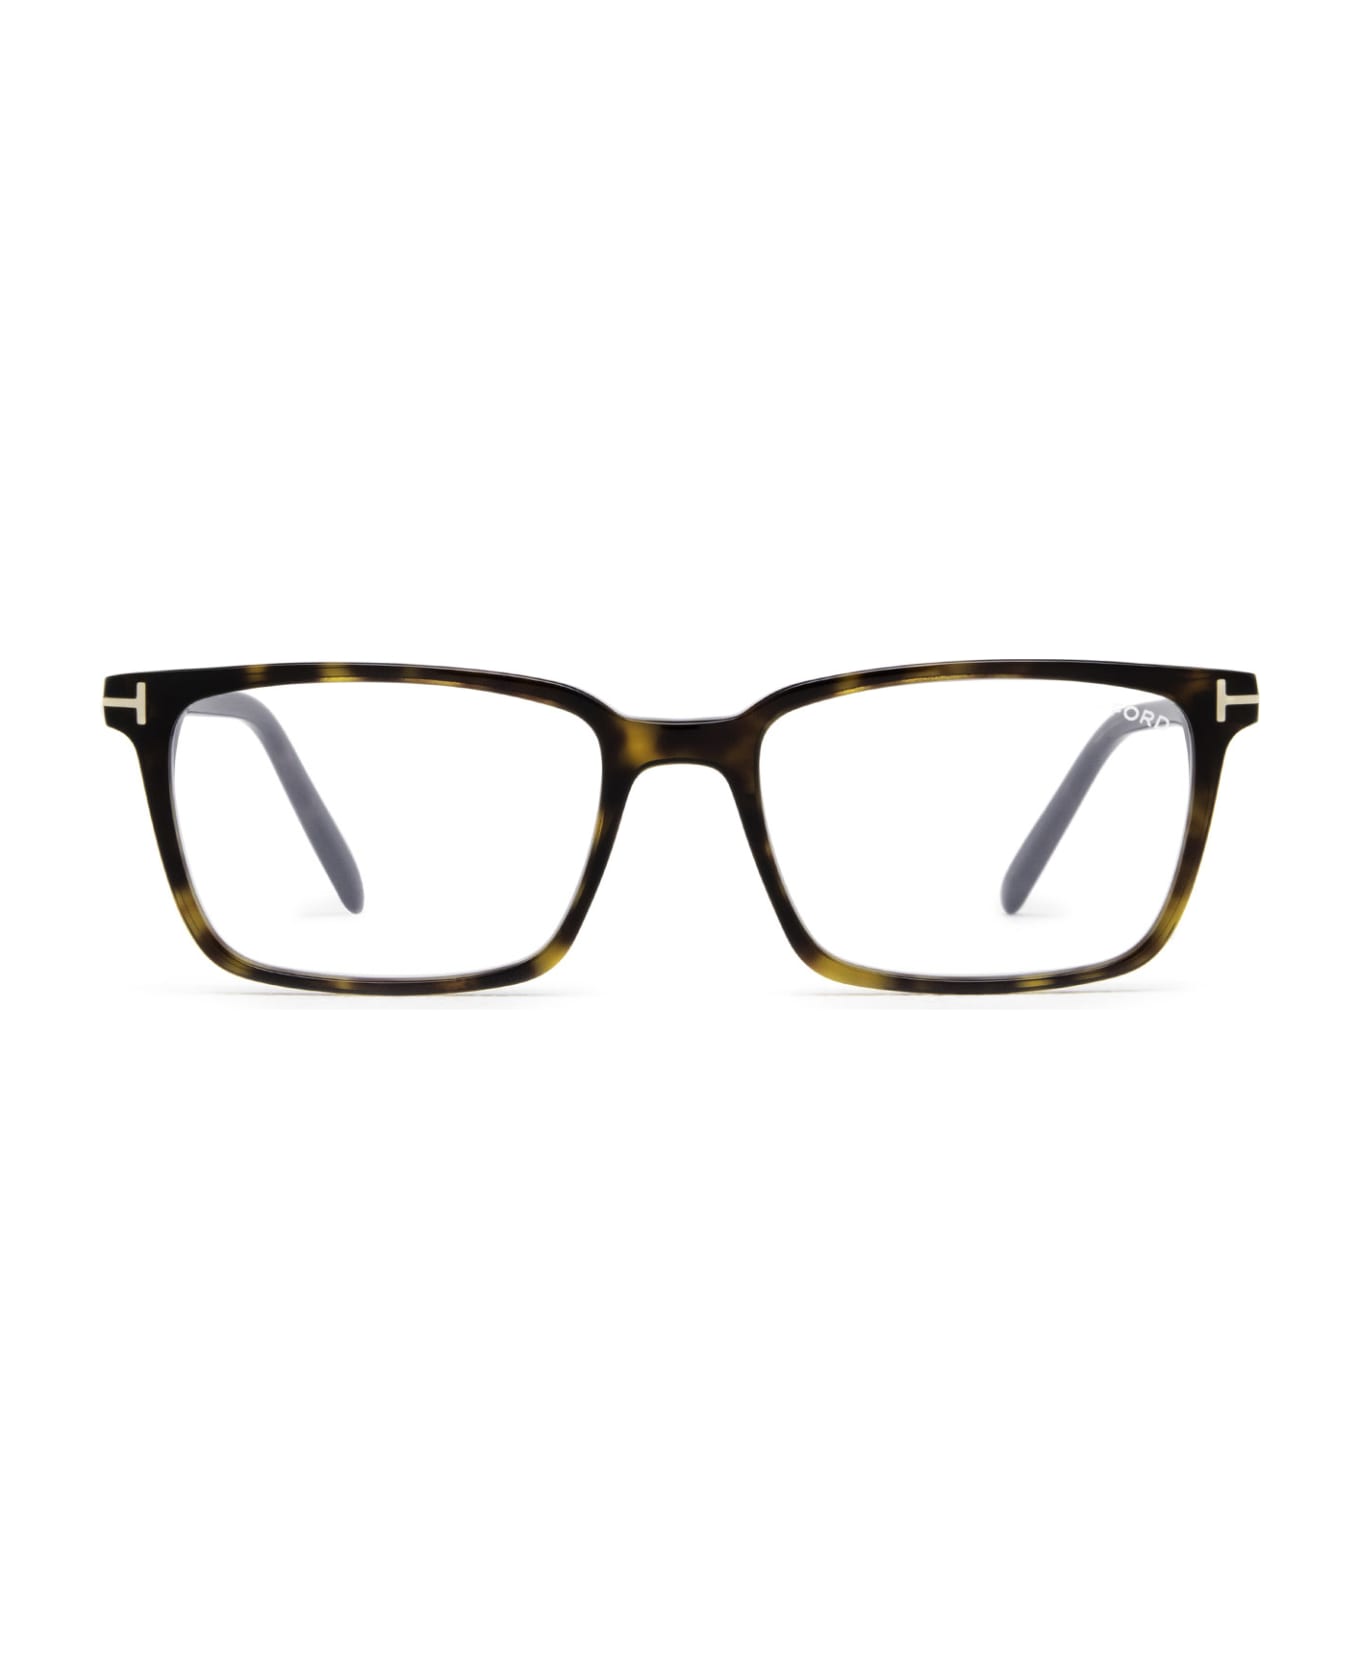 Tom Ford Eyewear Ft5802-b Dark Havana Glasses - Dark Havana